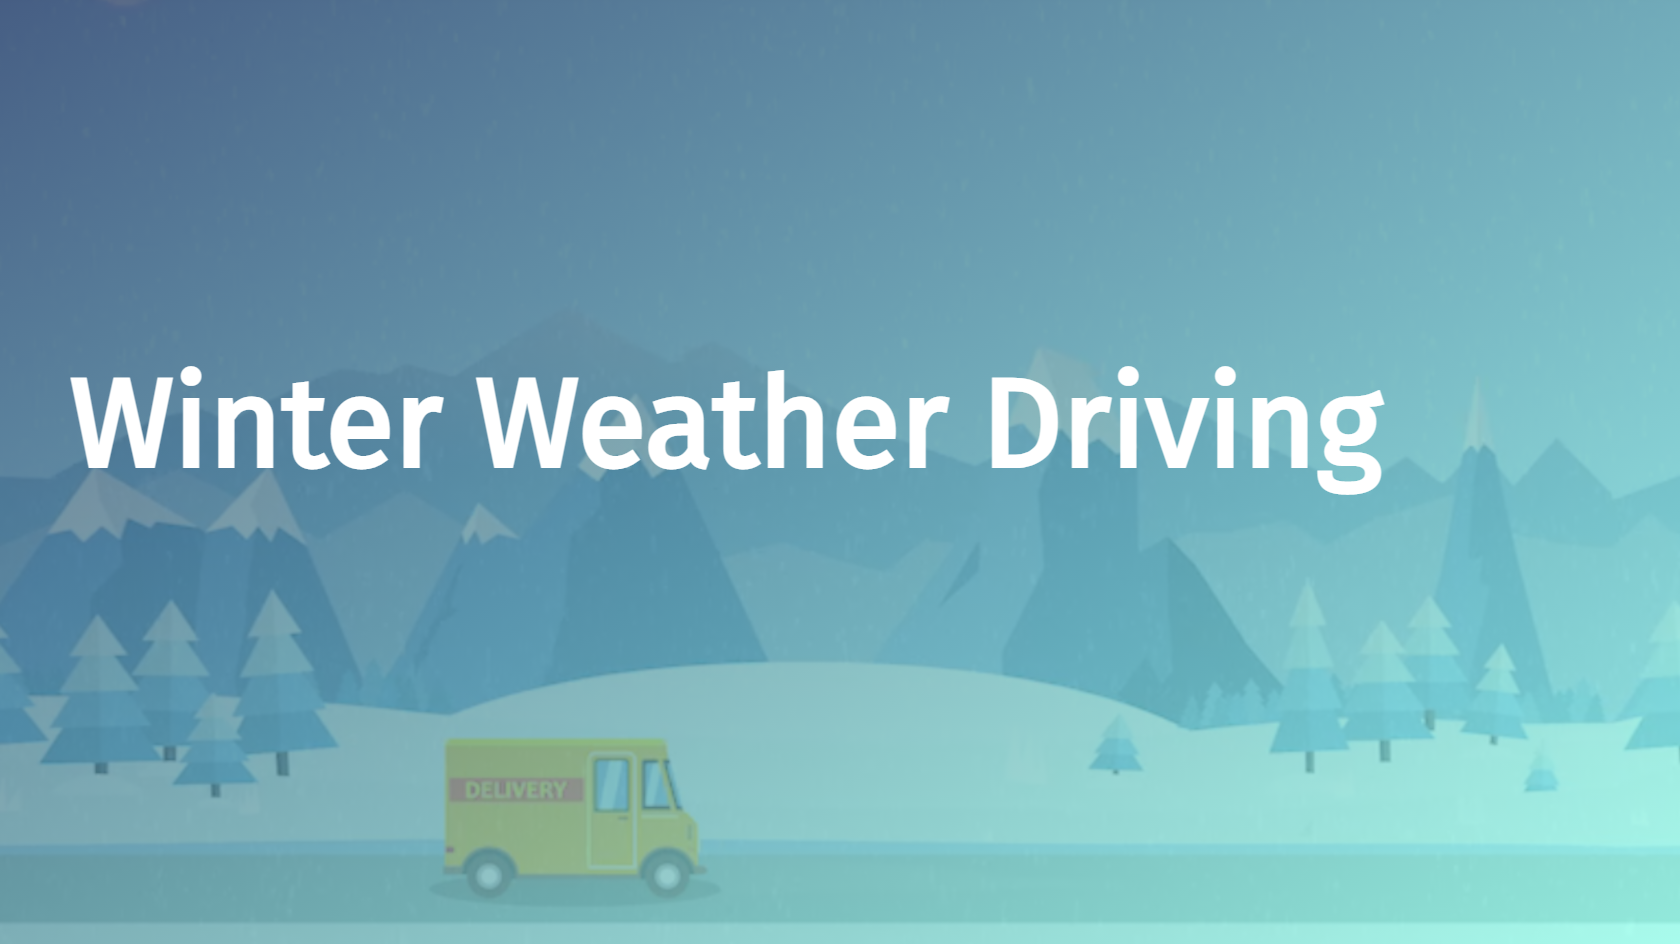 Spanish - Winter Weather Driving